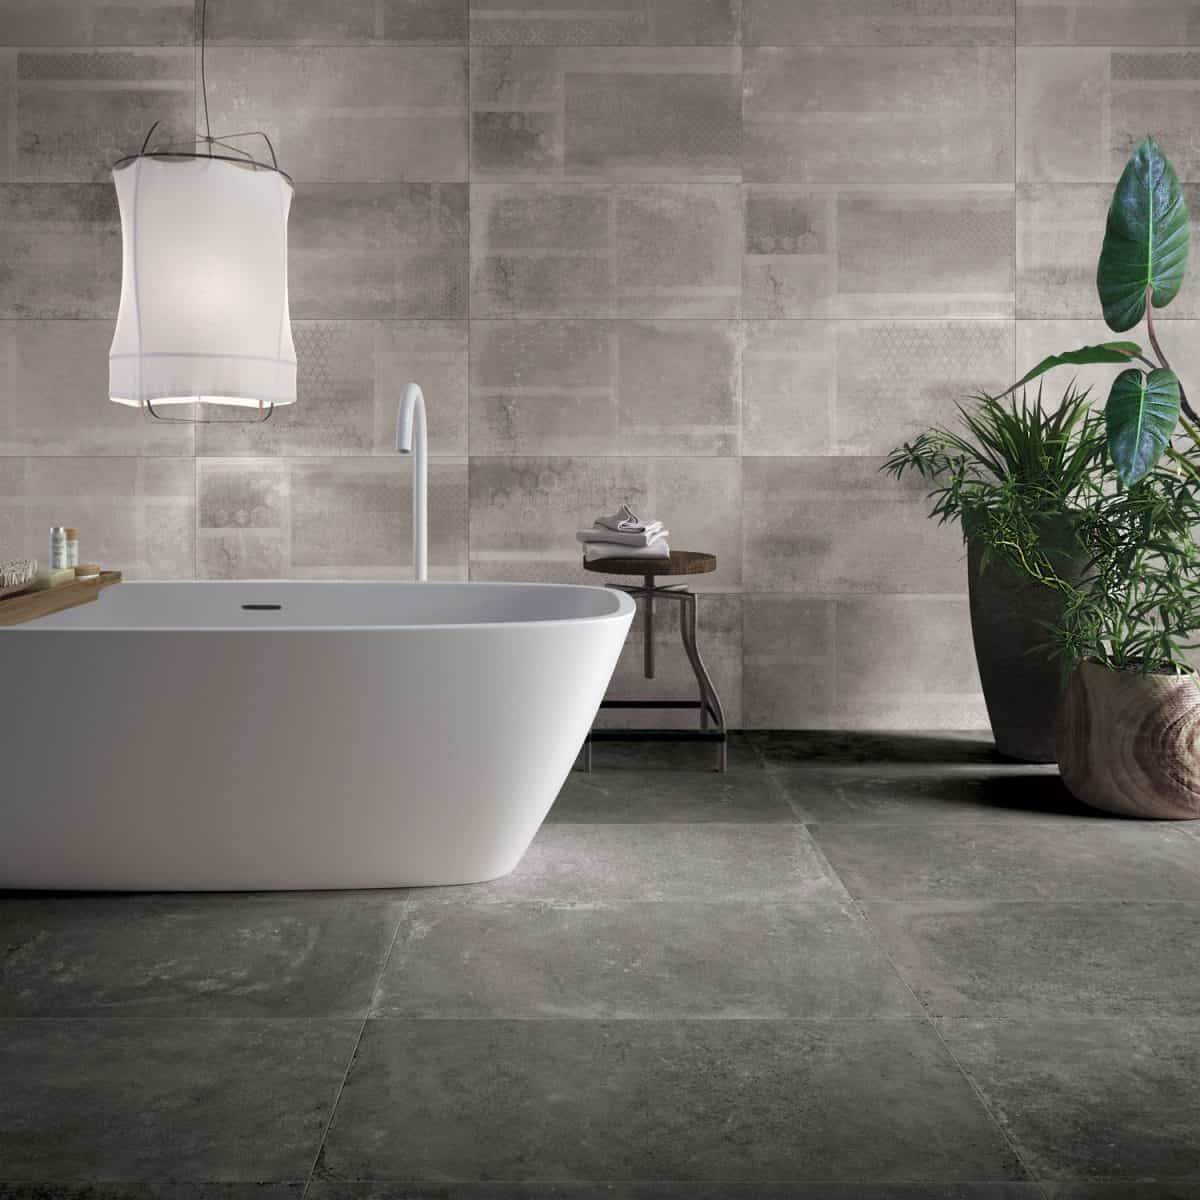 Modern bathroom with grey tiles, seamless, luxurious interior background.